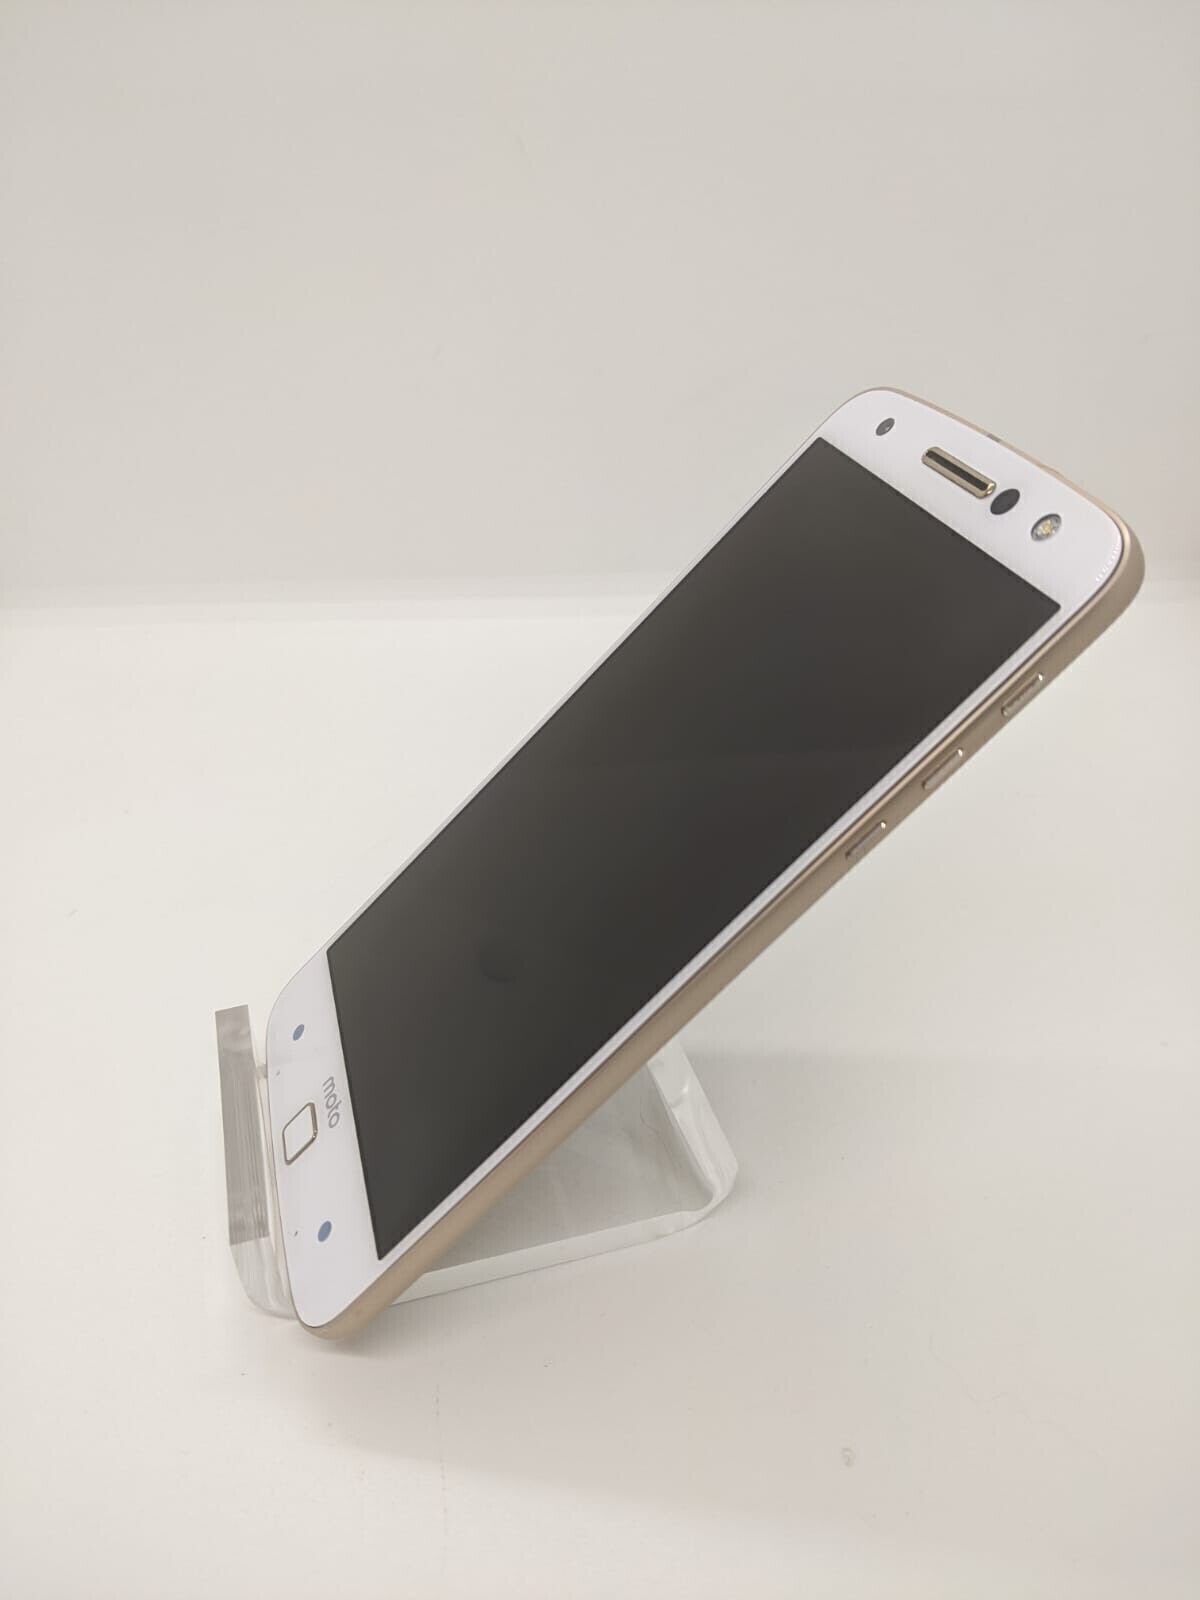 Motorola Moto Z Droid 32GB Gold Verizon Android 4G Smartphone XT1650-01